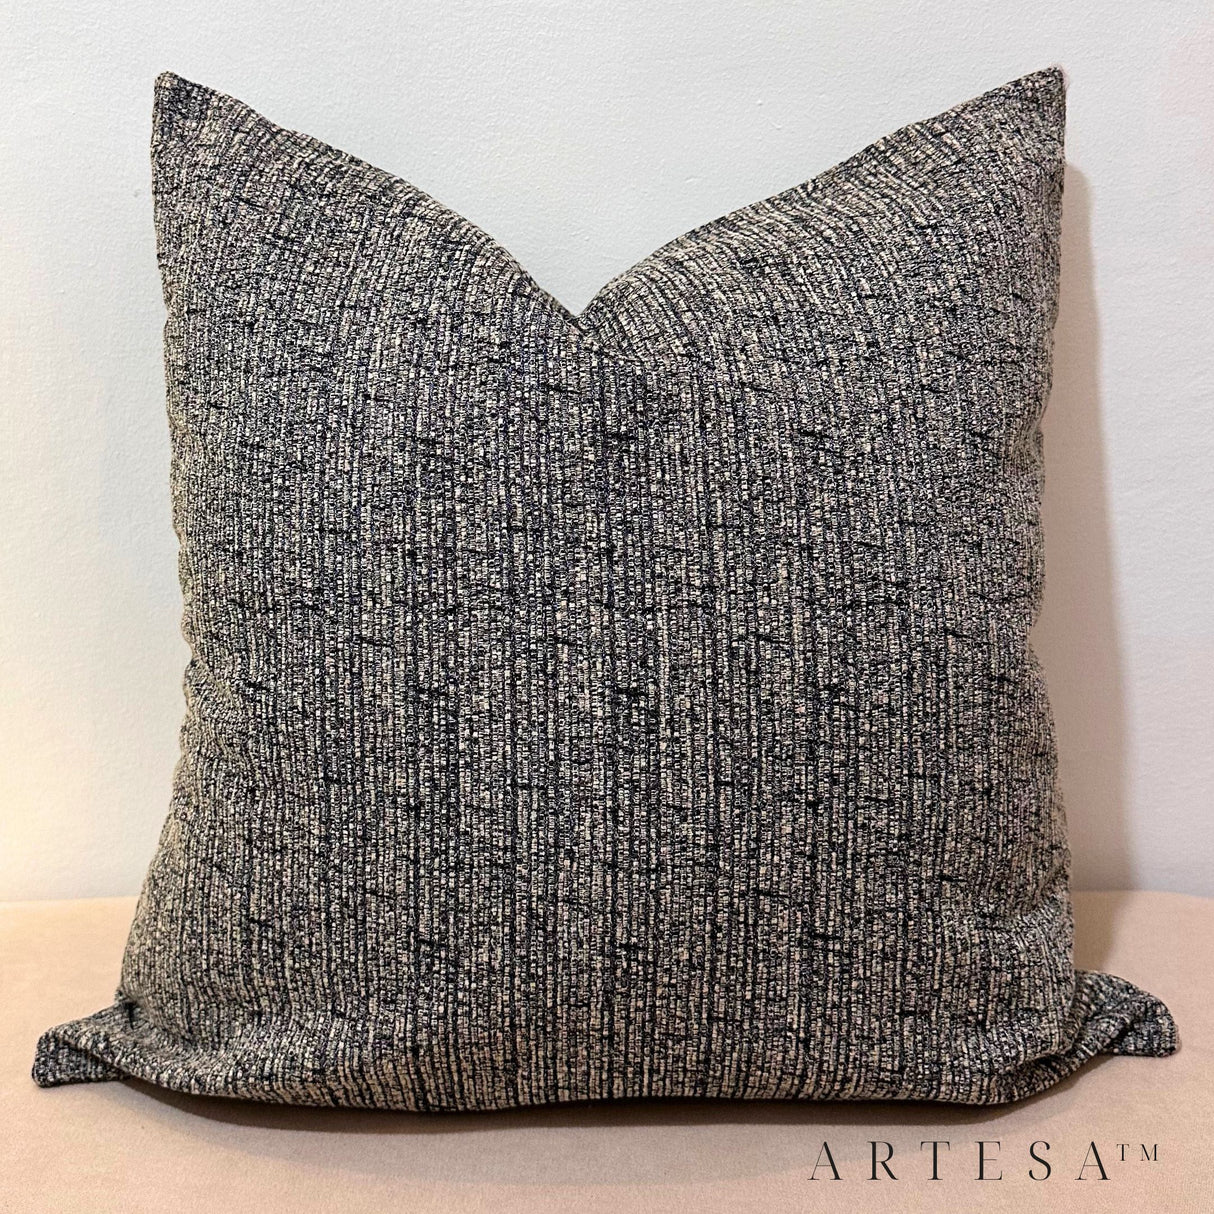 Artesa Lawin Premium Cotton Chanel Throw Pillow Cover with hidden zipper closure - Elegant Home Decor Accent